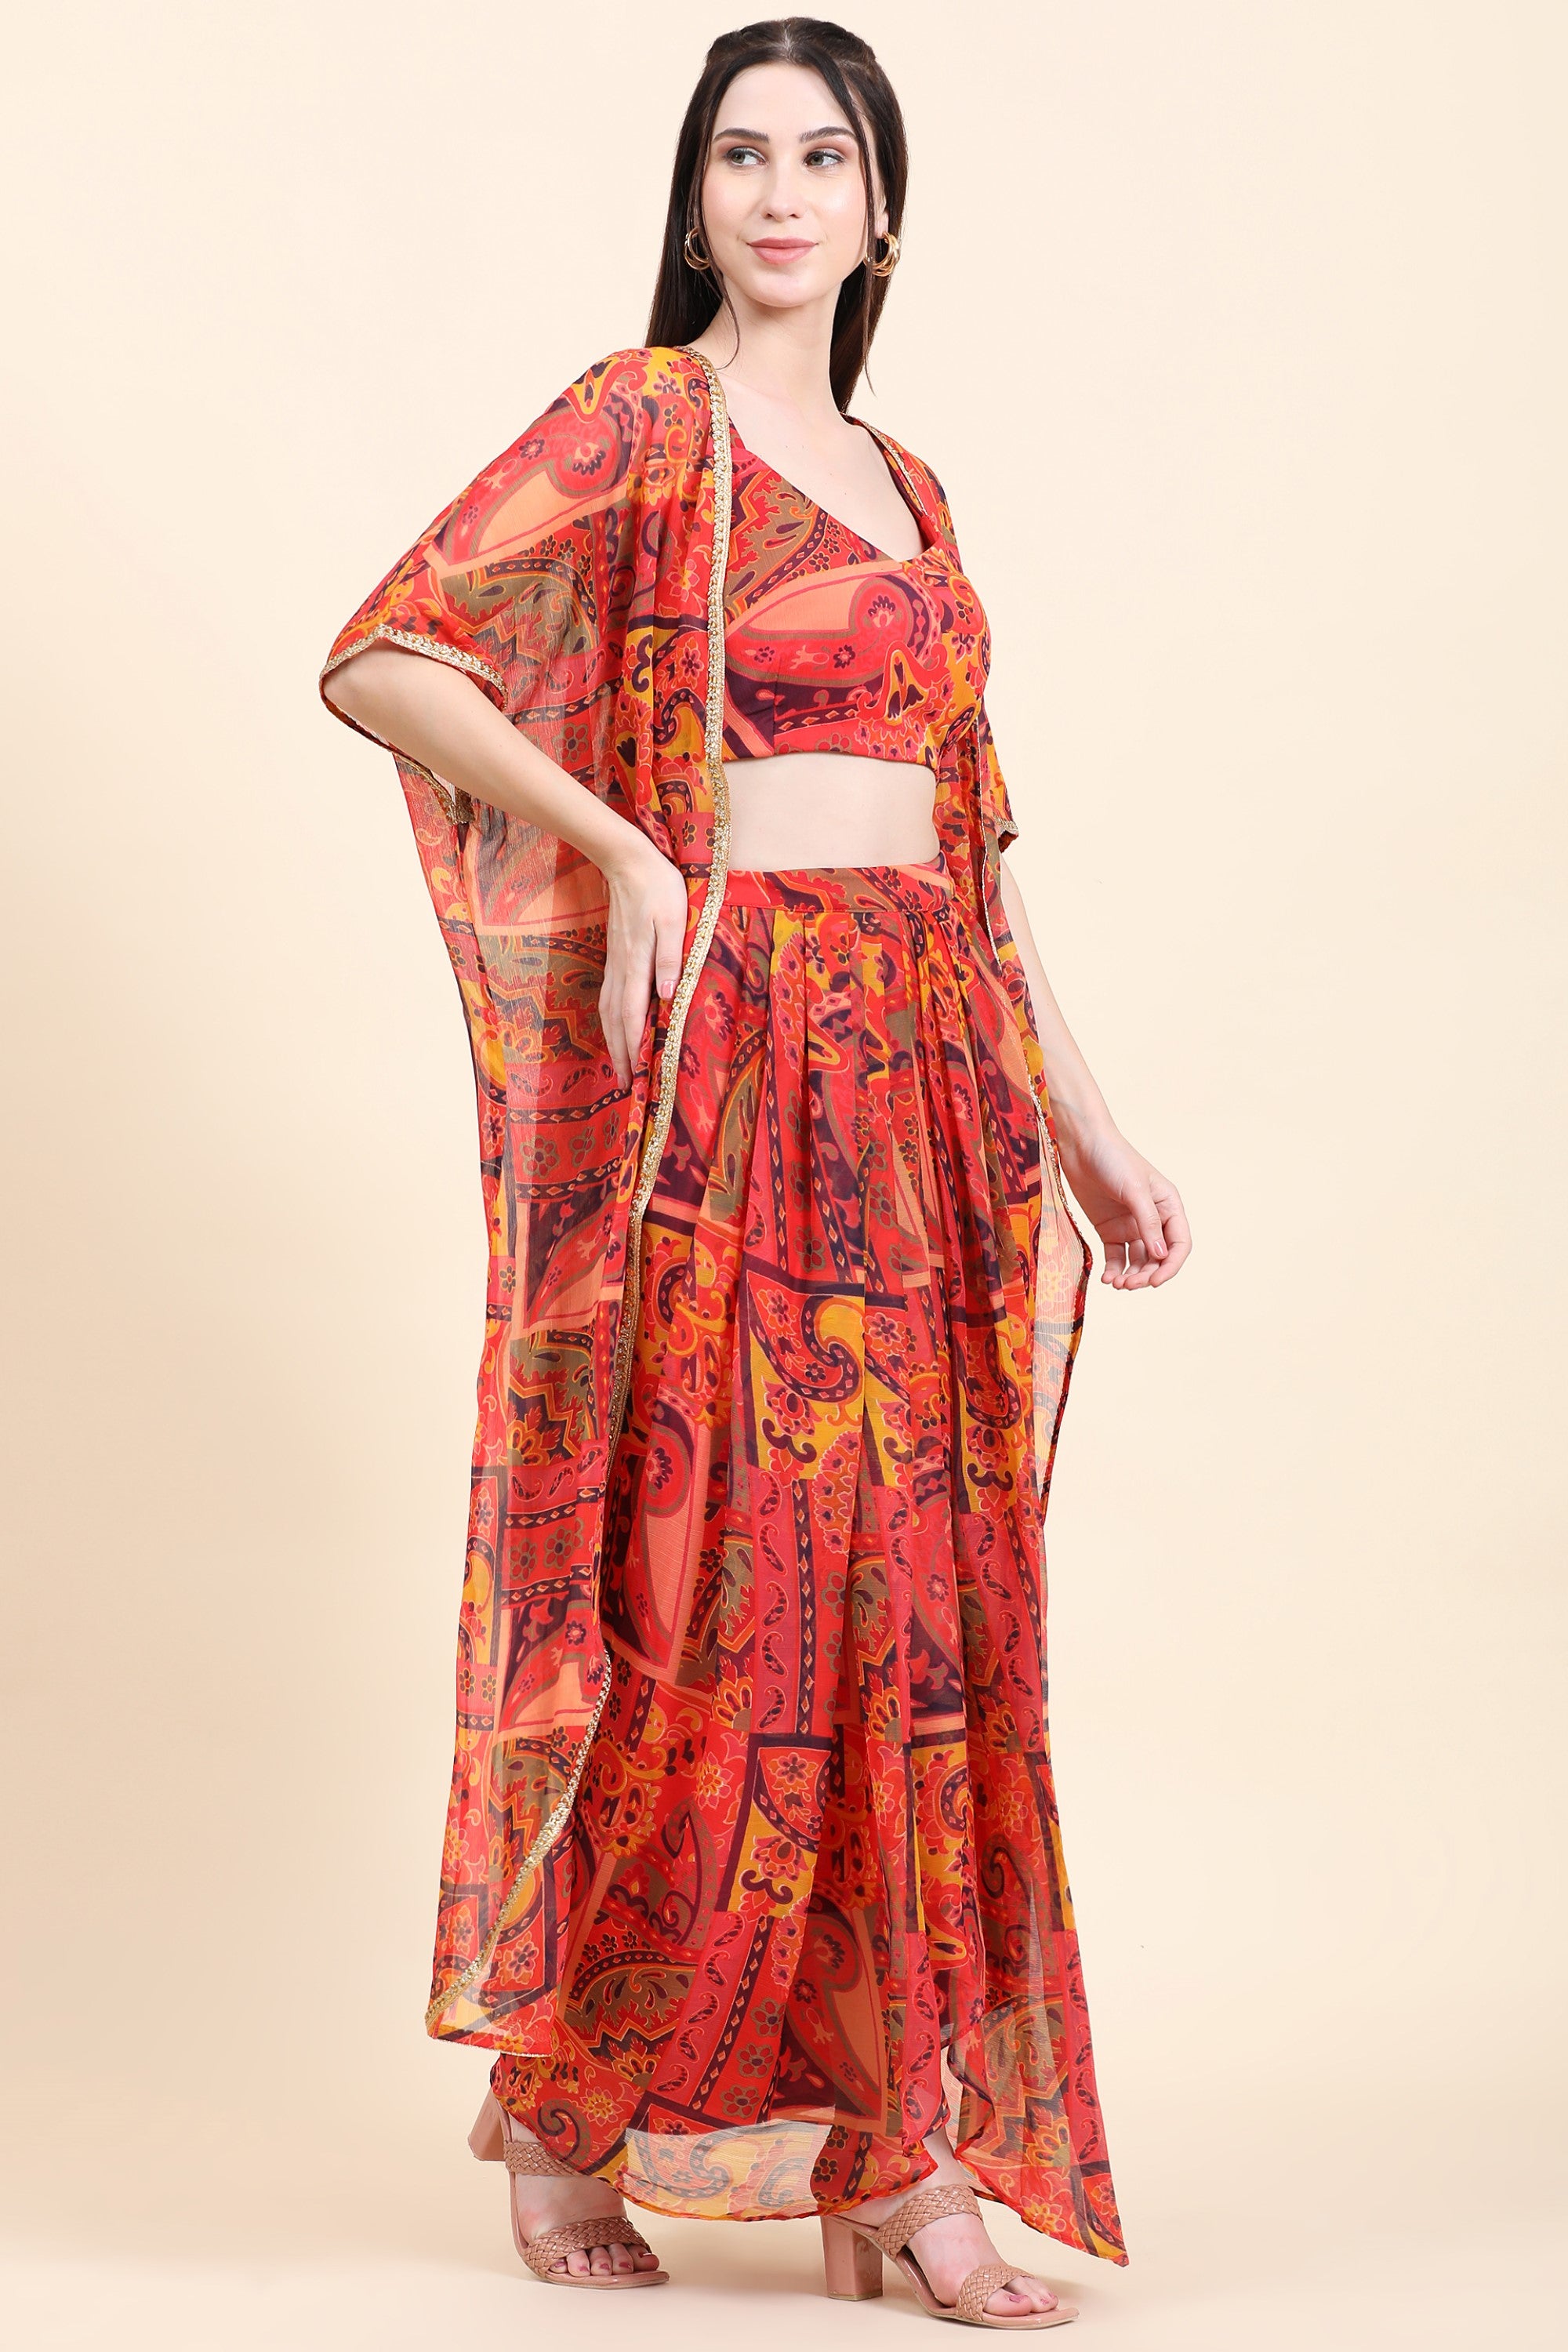 Women's Red base Multicolor print Chiffon Blouse, Cape, Dhoti drape Skirt set - MIRACOLOS by Ruchi